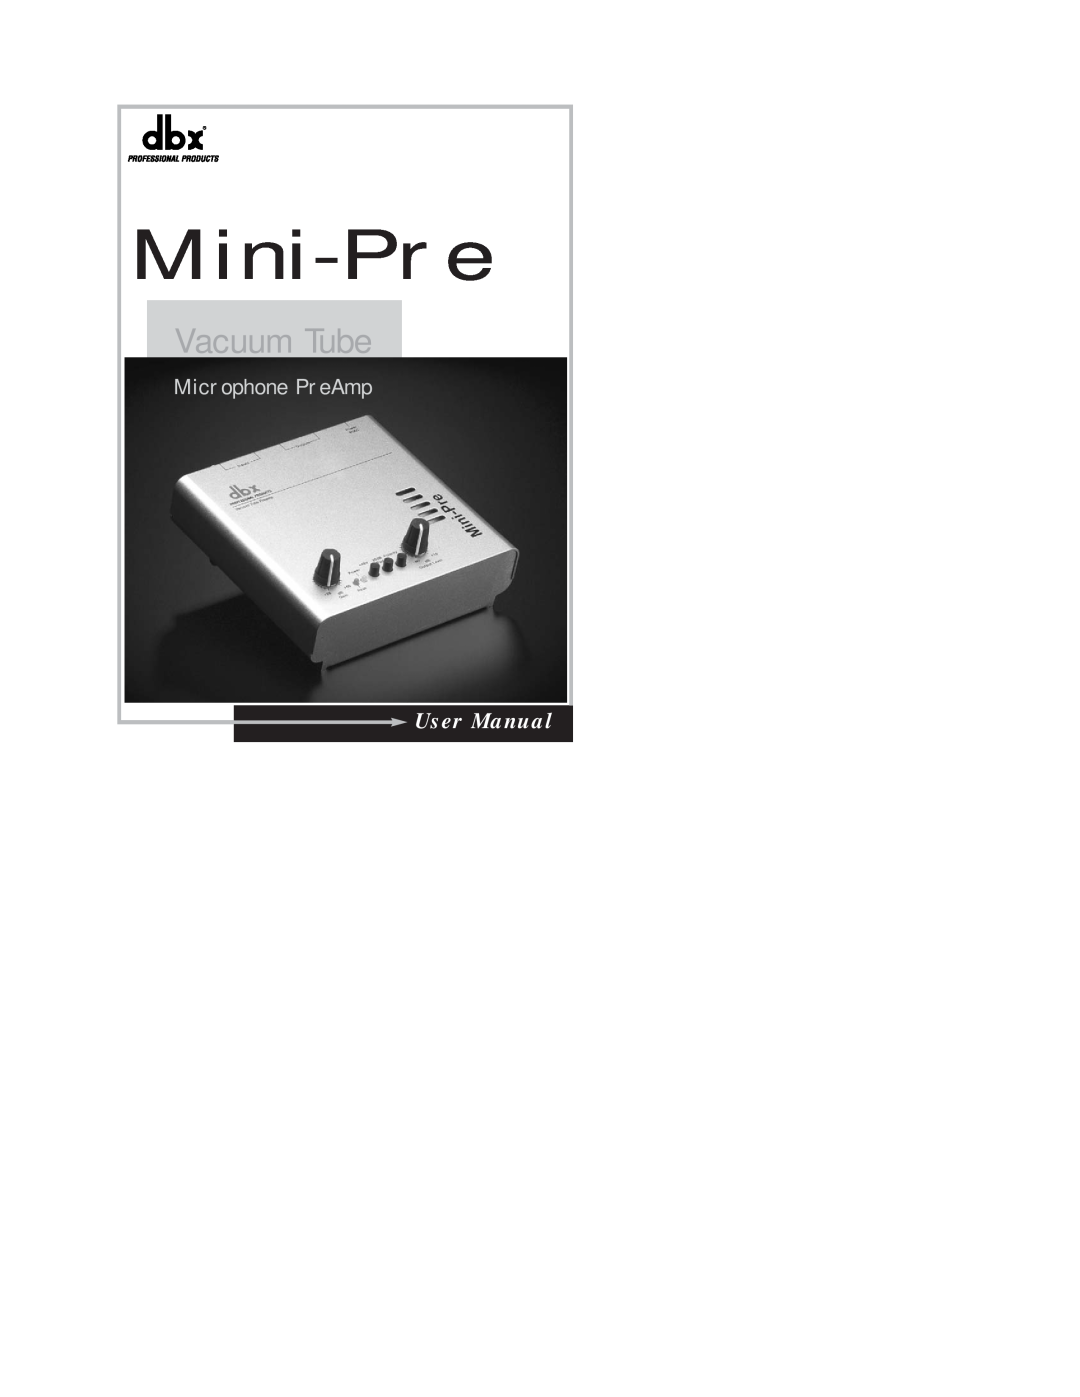 dbx Pro Vacuum Tube Microphone PreAmp user manual Mini-Pre 